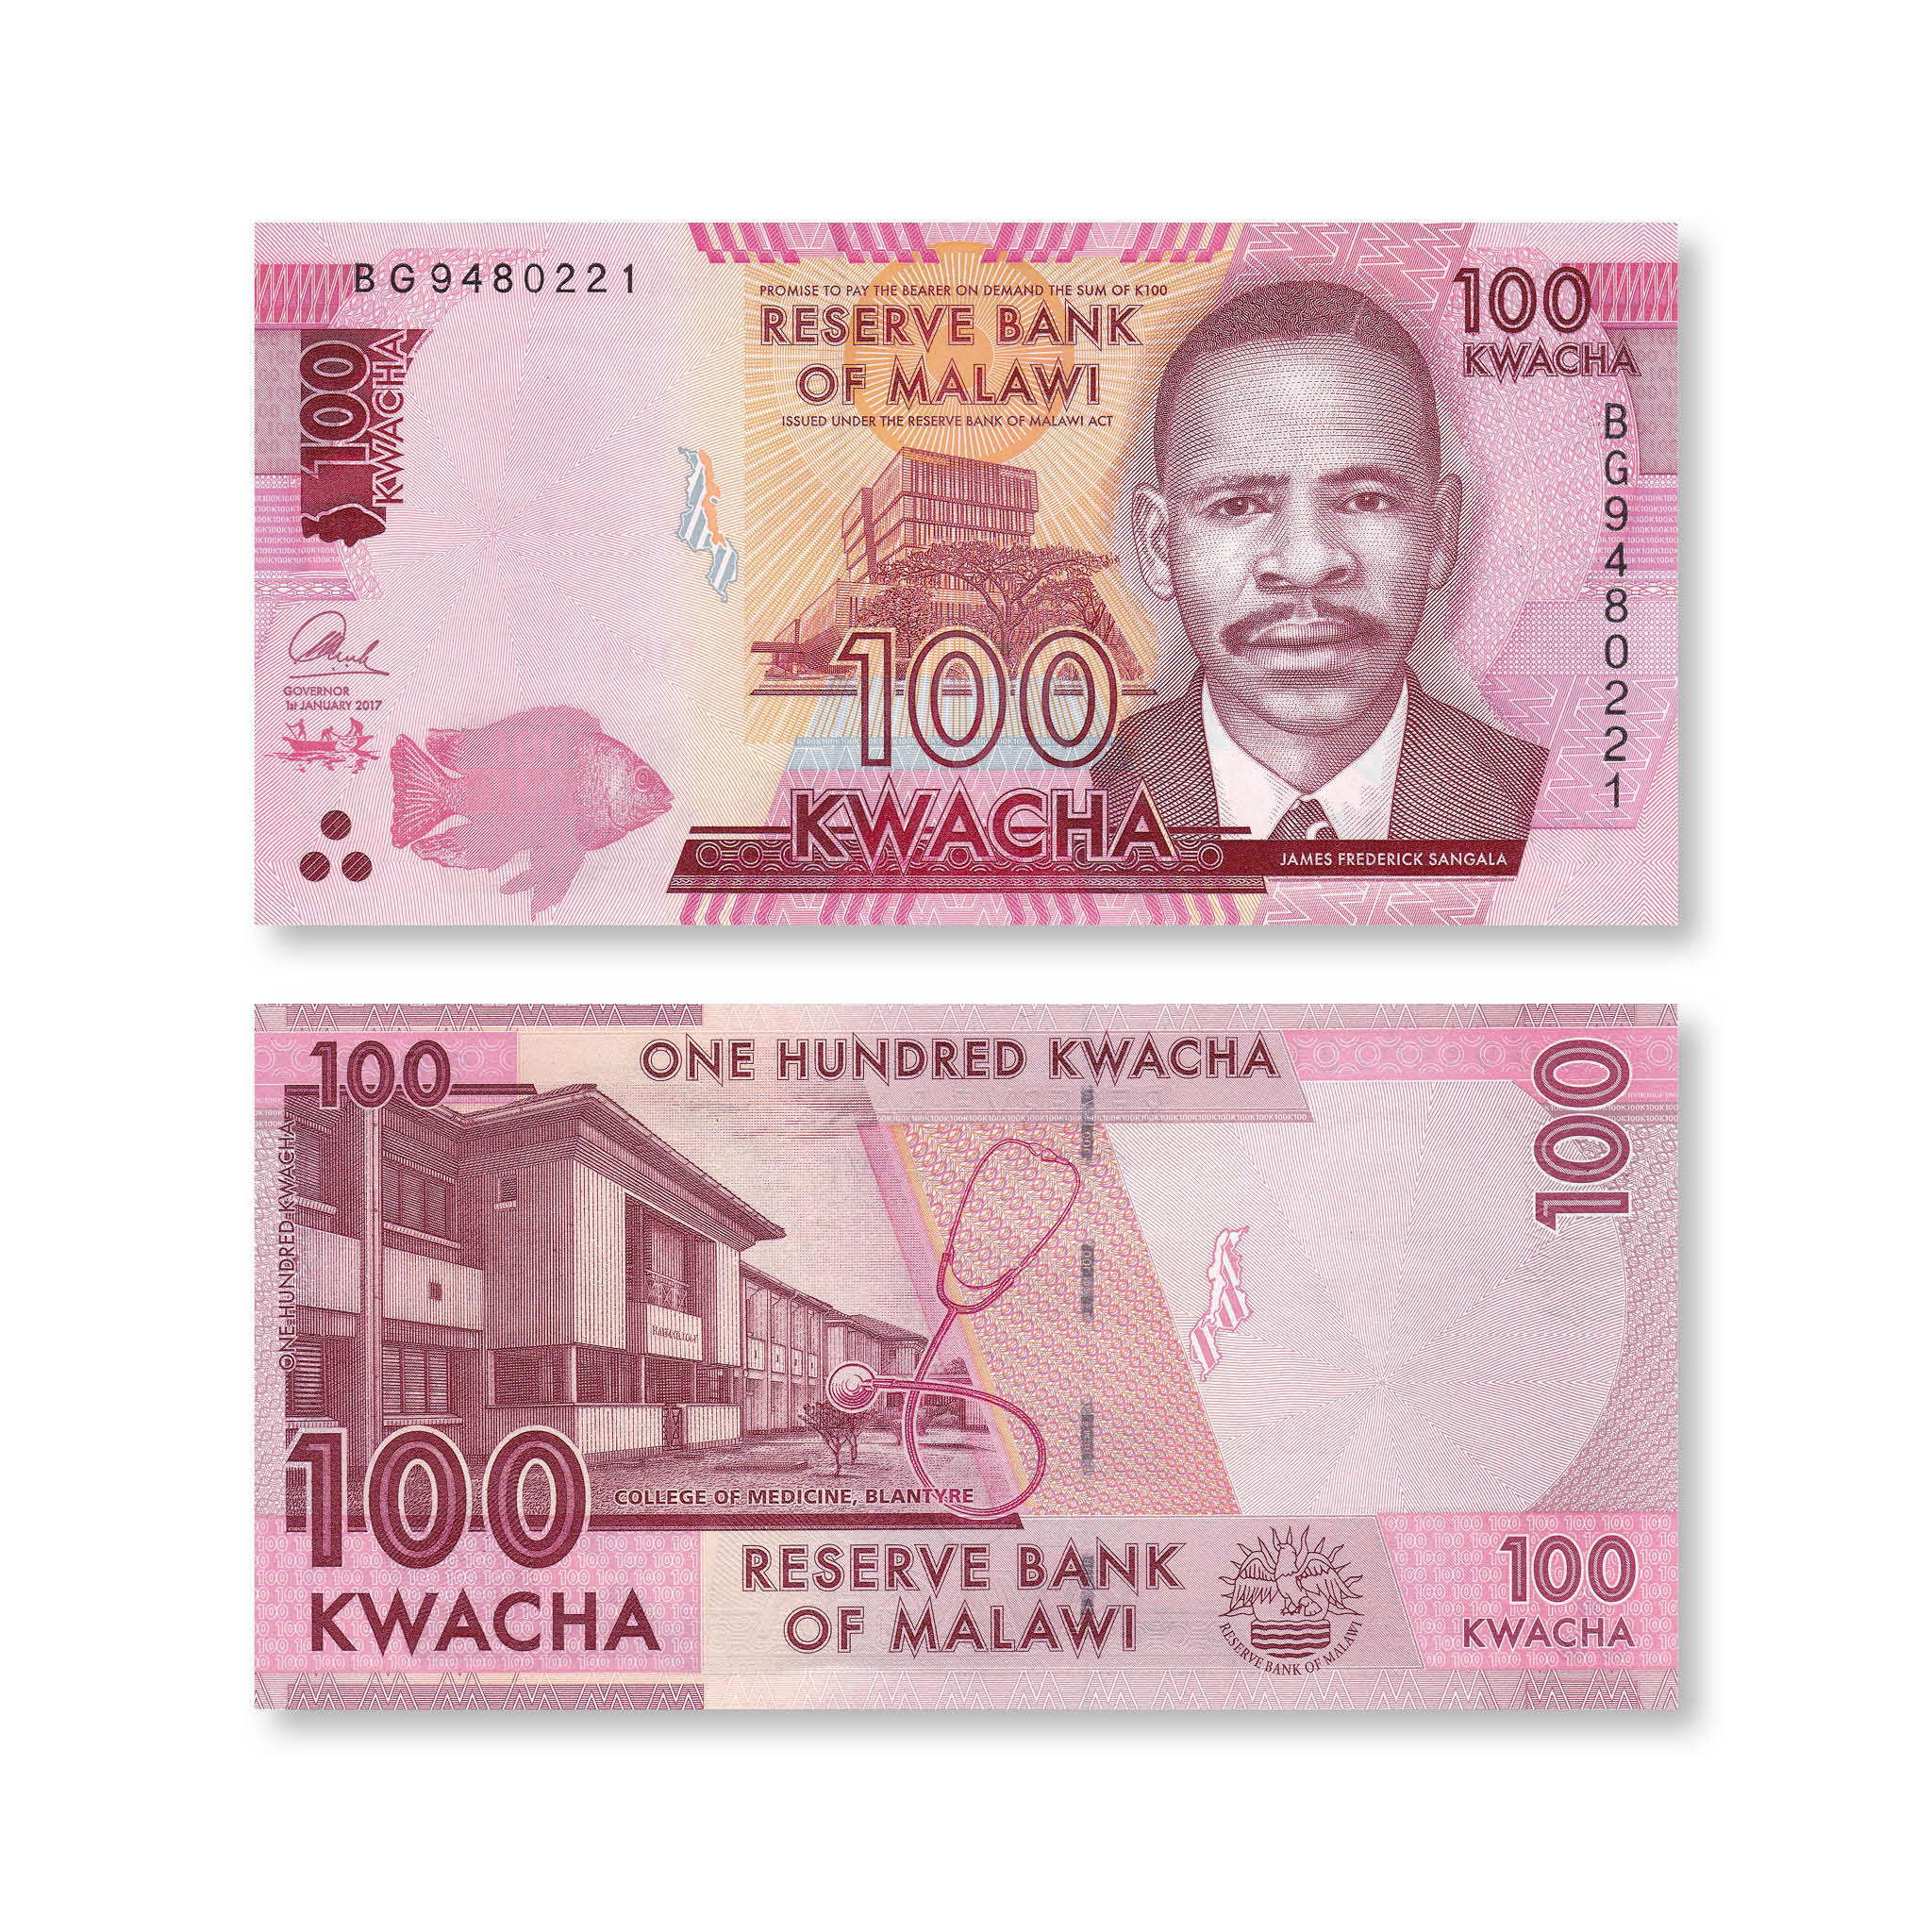 Malawi 100 Kwacha, 2017, B159c, P65c, UNC - Robert's World Money - World Banknotes